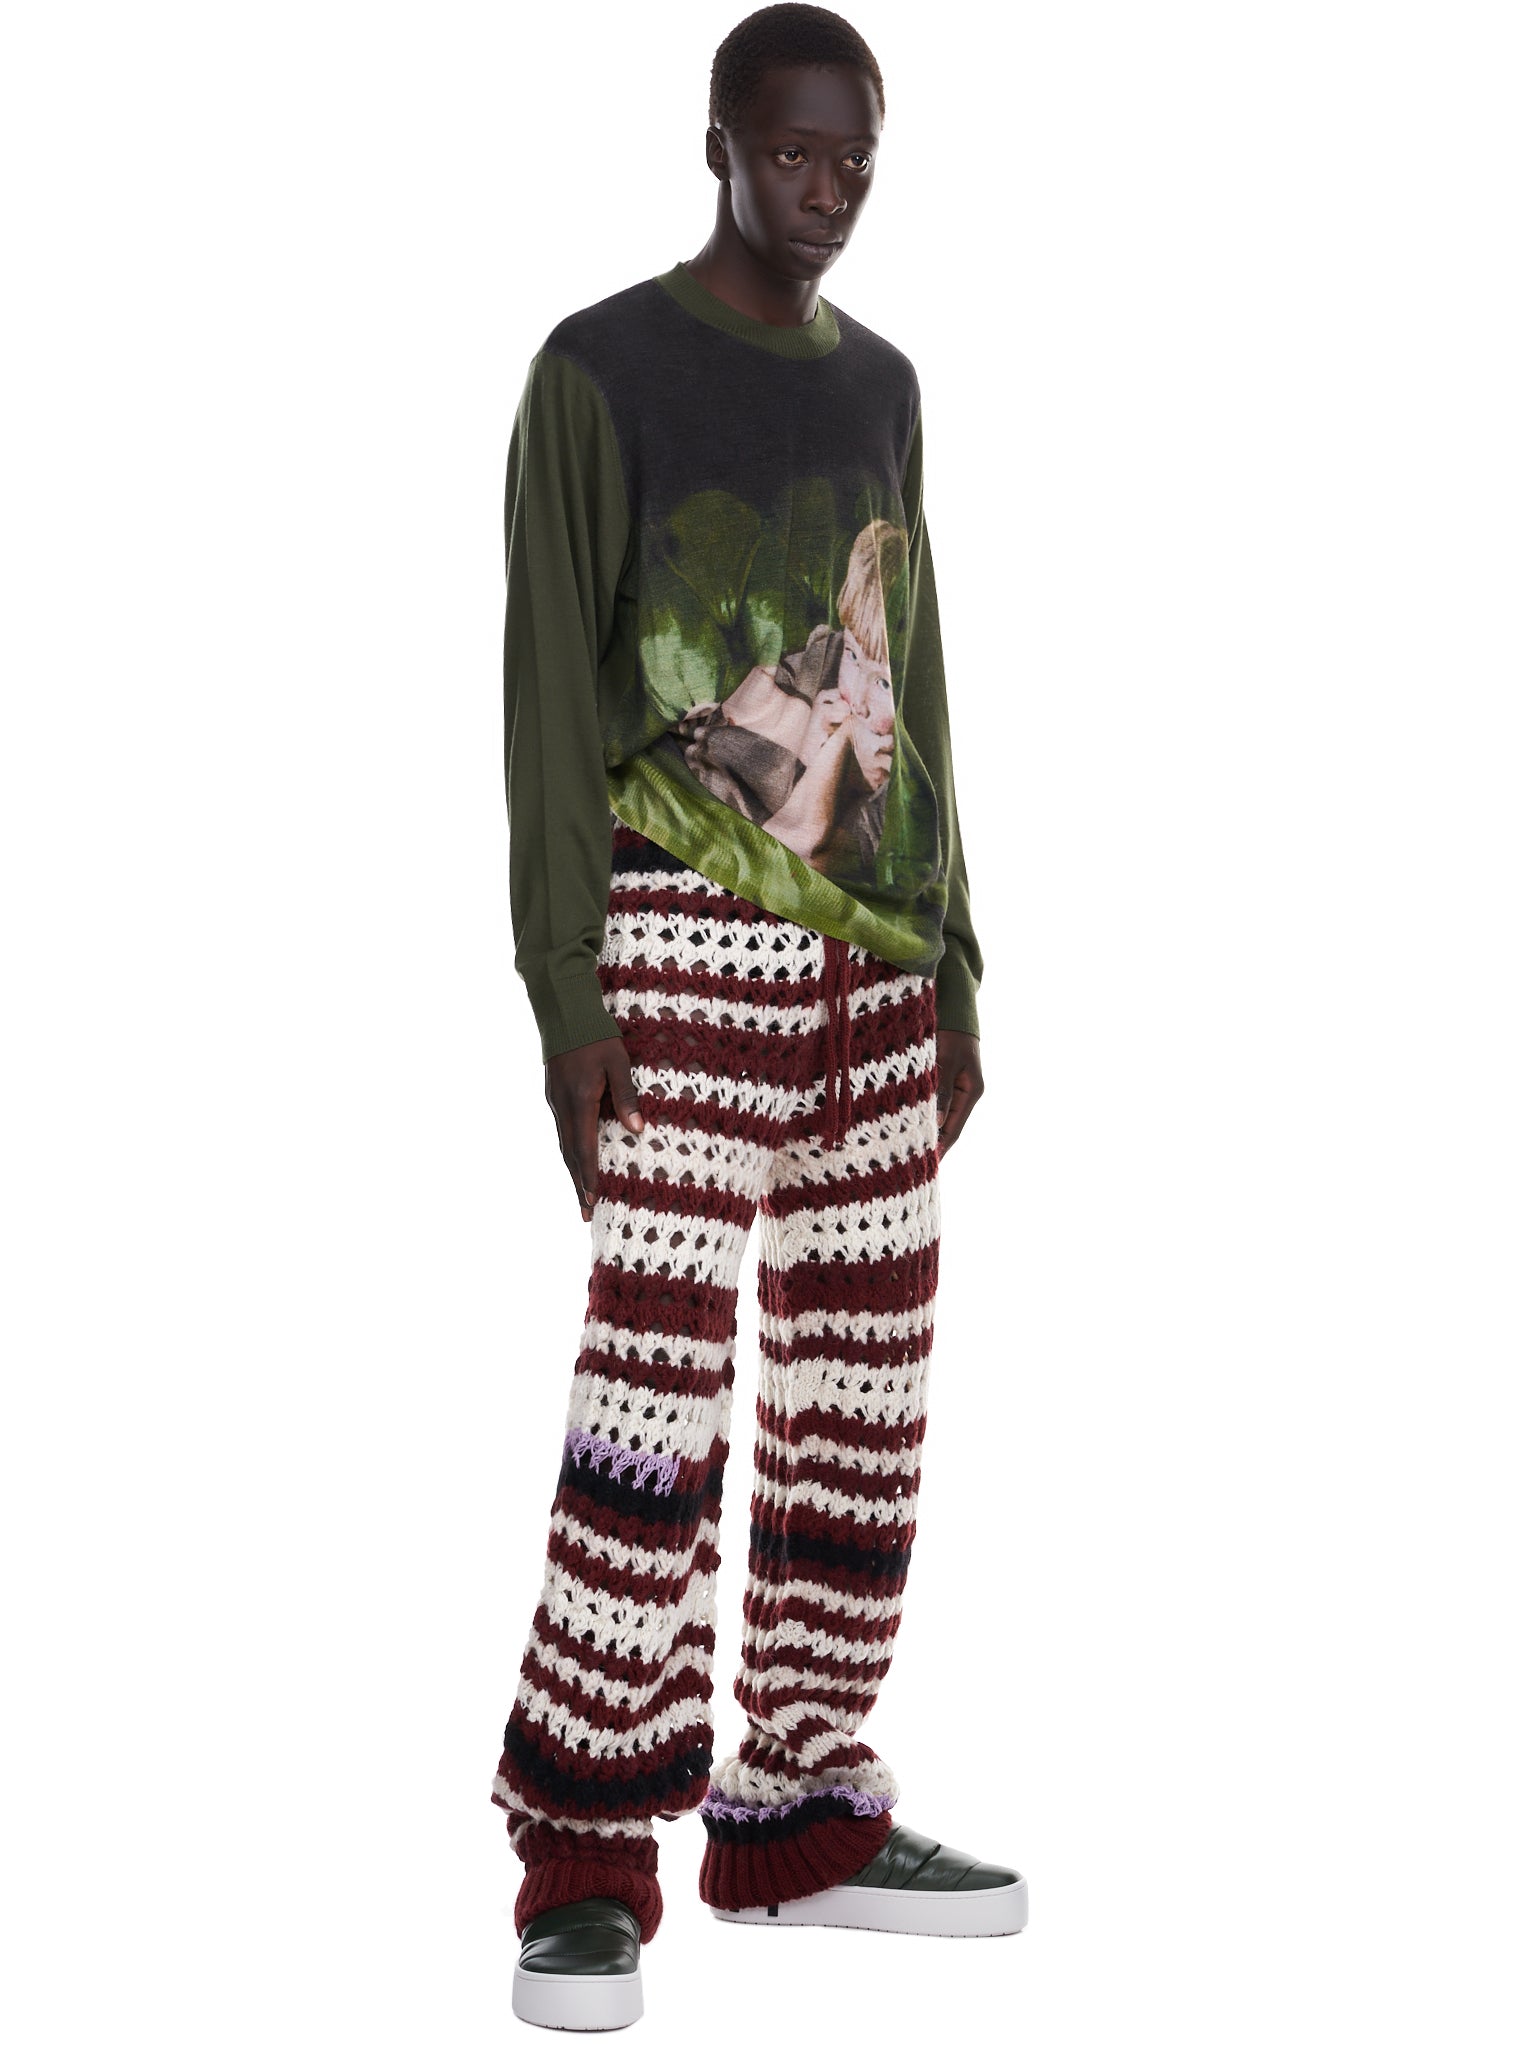 JLDWYKK 3D T-Shirts Abstract Spiral Zebra Crew Neck Sweatshirt